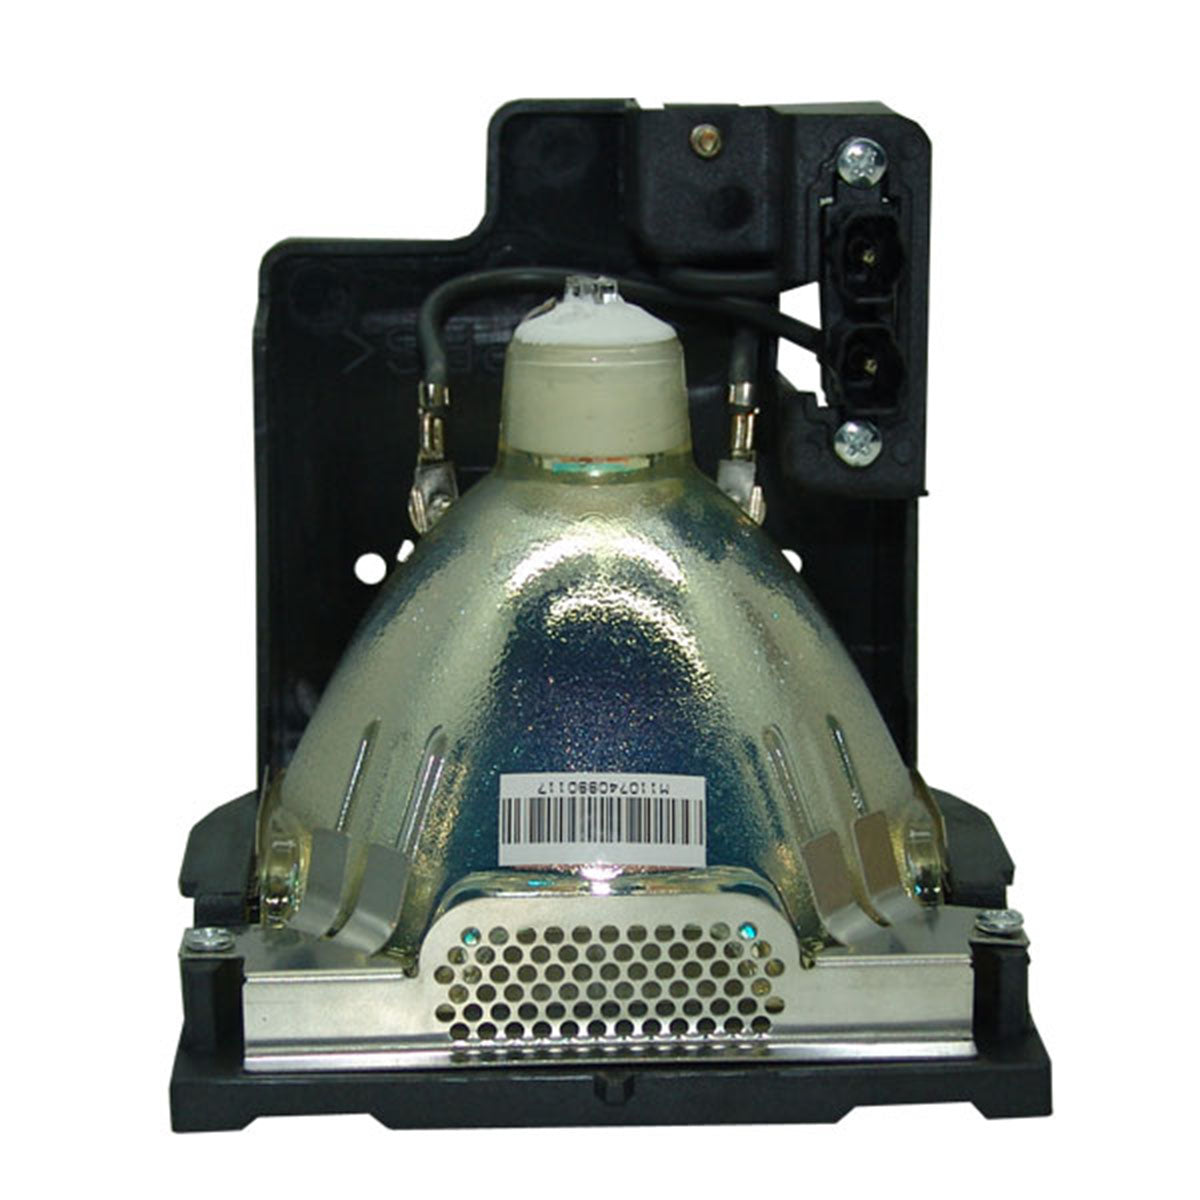 Sanyo POA-LMP100 Compatible Projector Lamp Module